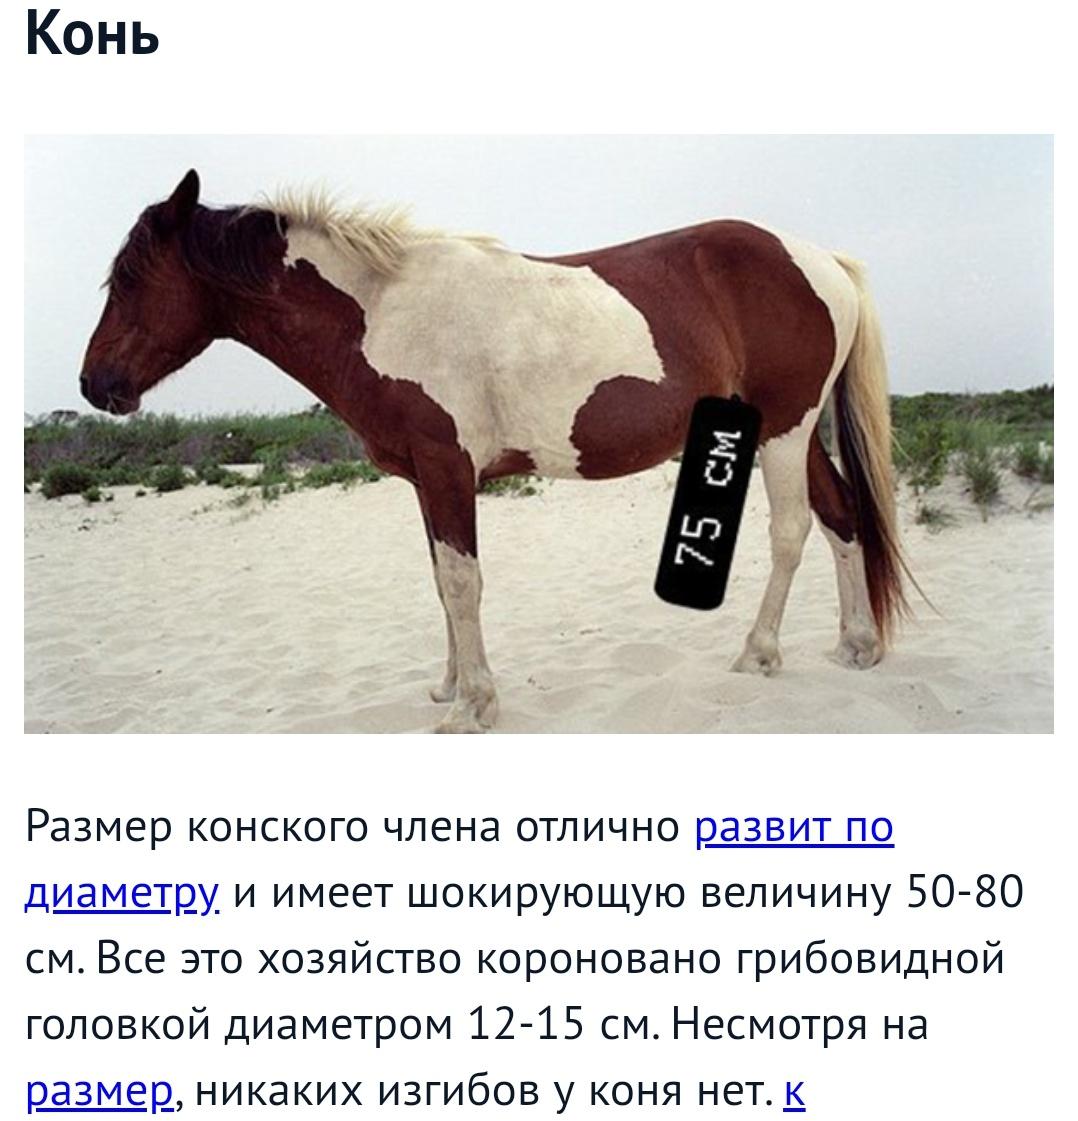 какая длина члена у коня (119) фото